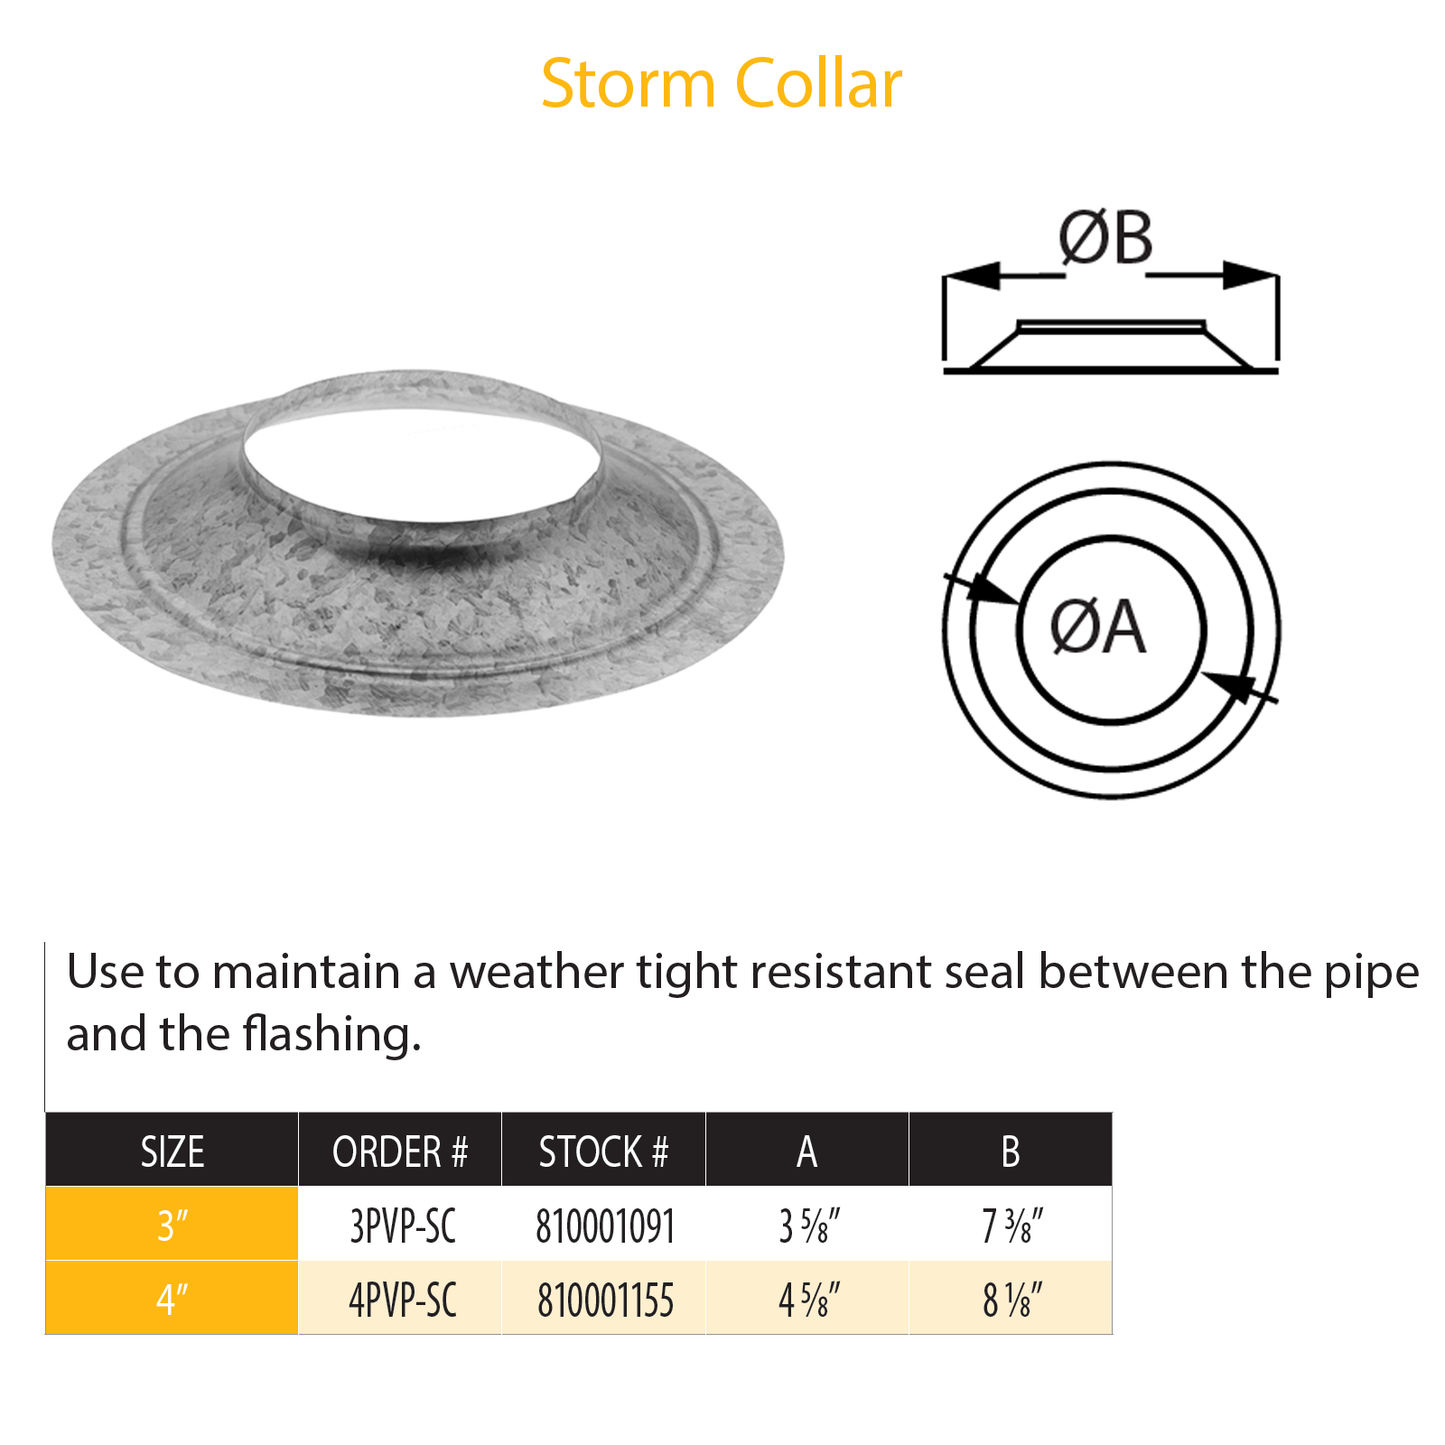 DuraVent Pellet Vent Pro Storm Collar | 4PVP-SC